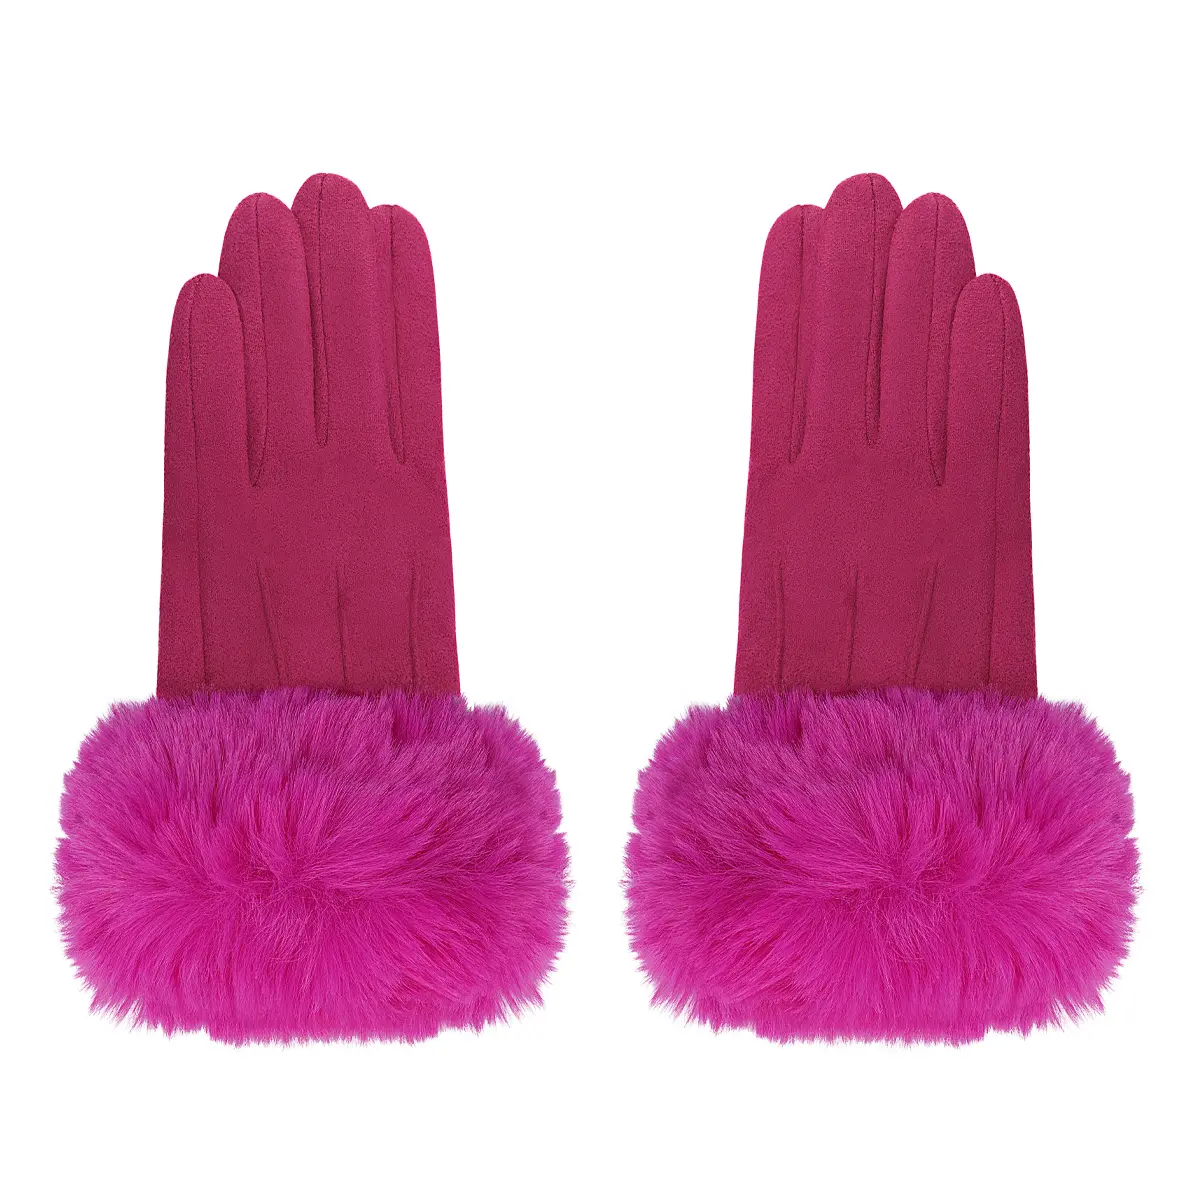 suèdine Handschoenen Faux Fur fuchsia gloves handschoen dames bont kopen bestellen winter accessoires